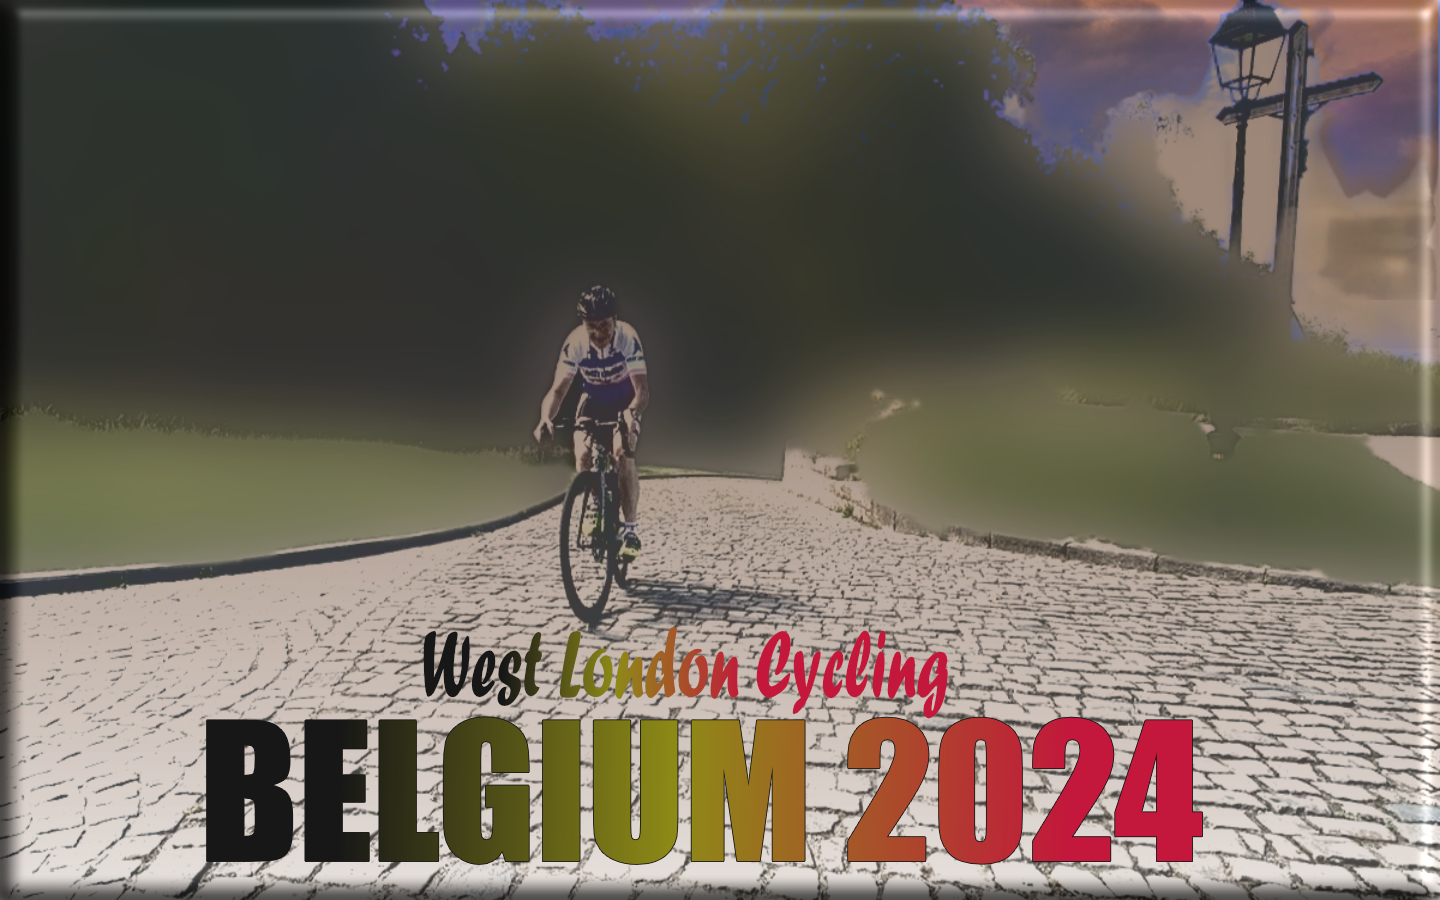 BELGIUM 2024 WEST LONDON CYCLING